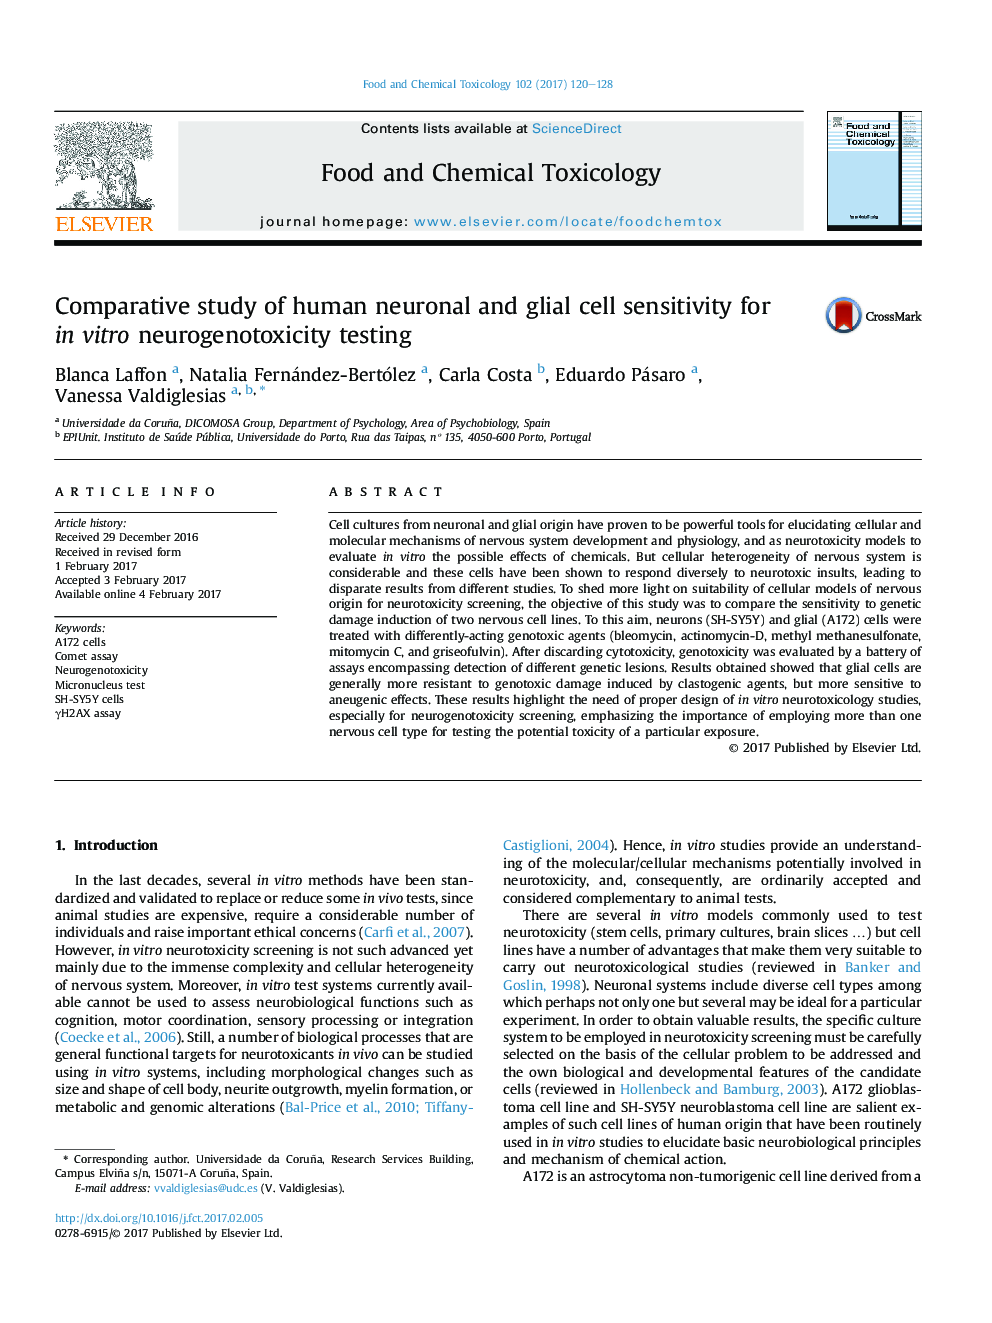 Comparative study of human neuronal and glial cell sensitivity for inÂ vitro neurogenotoxicity testing